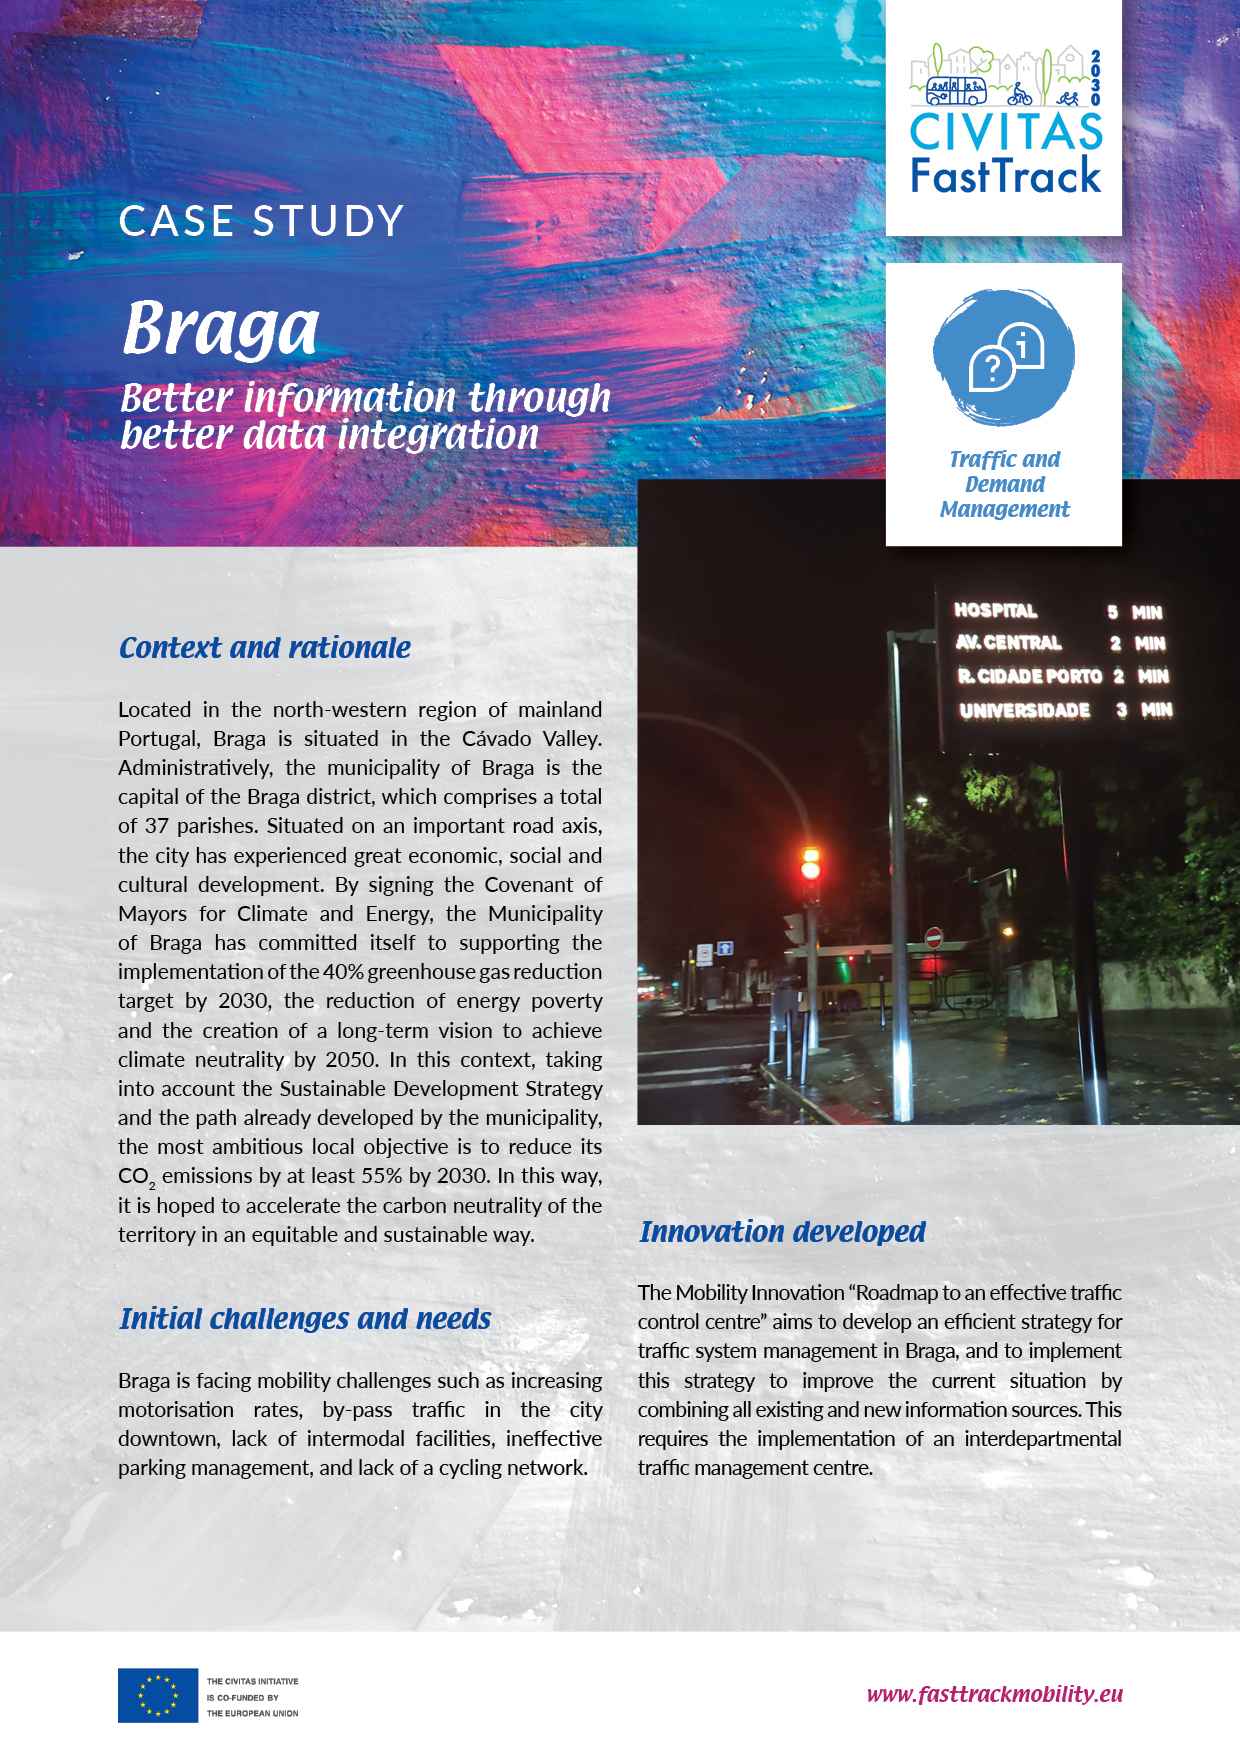 Braga - Better information through better data integration